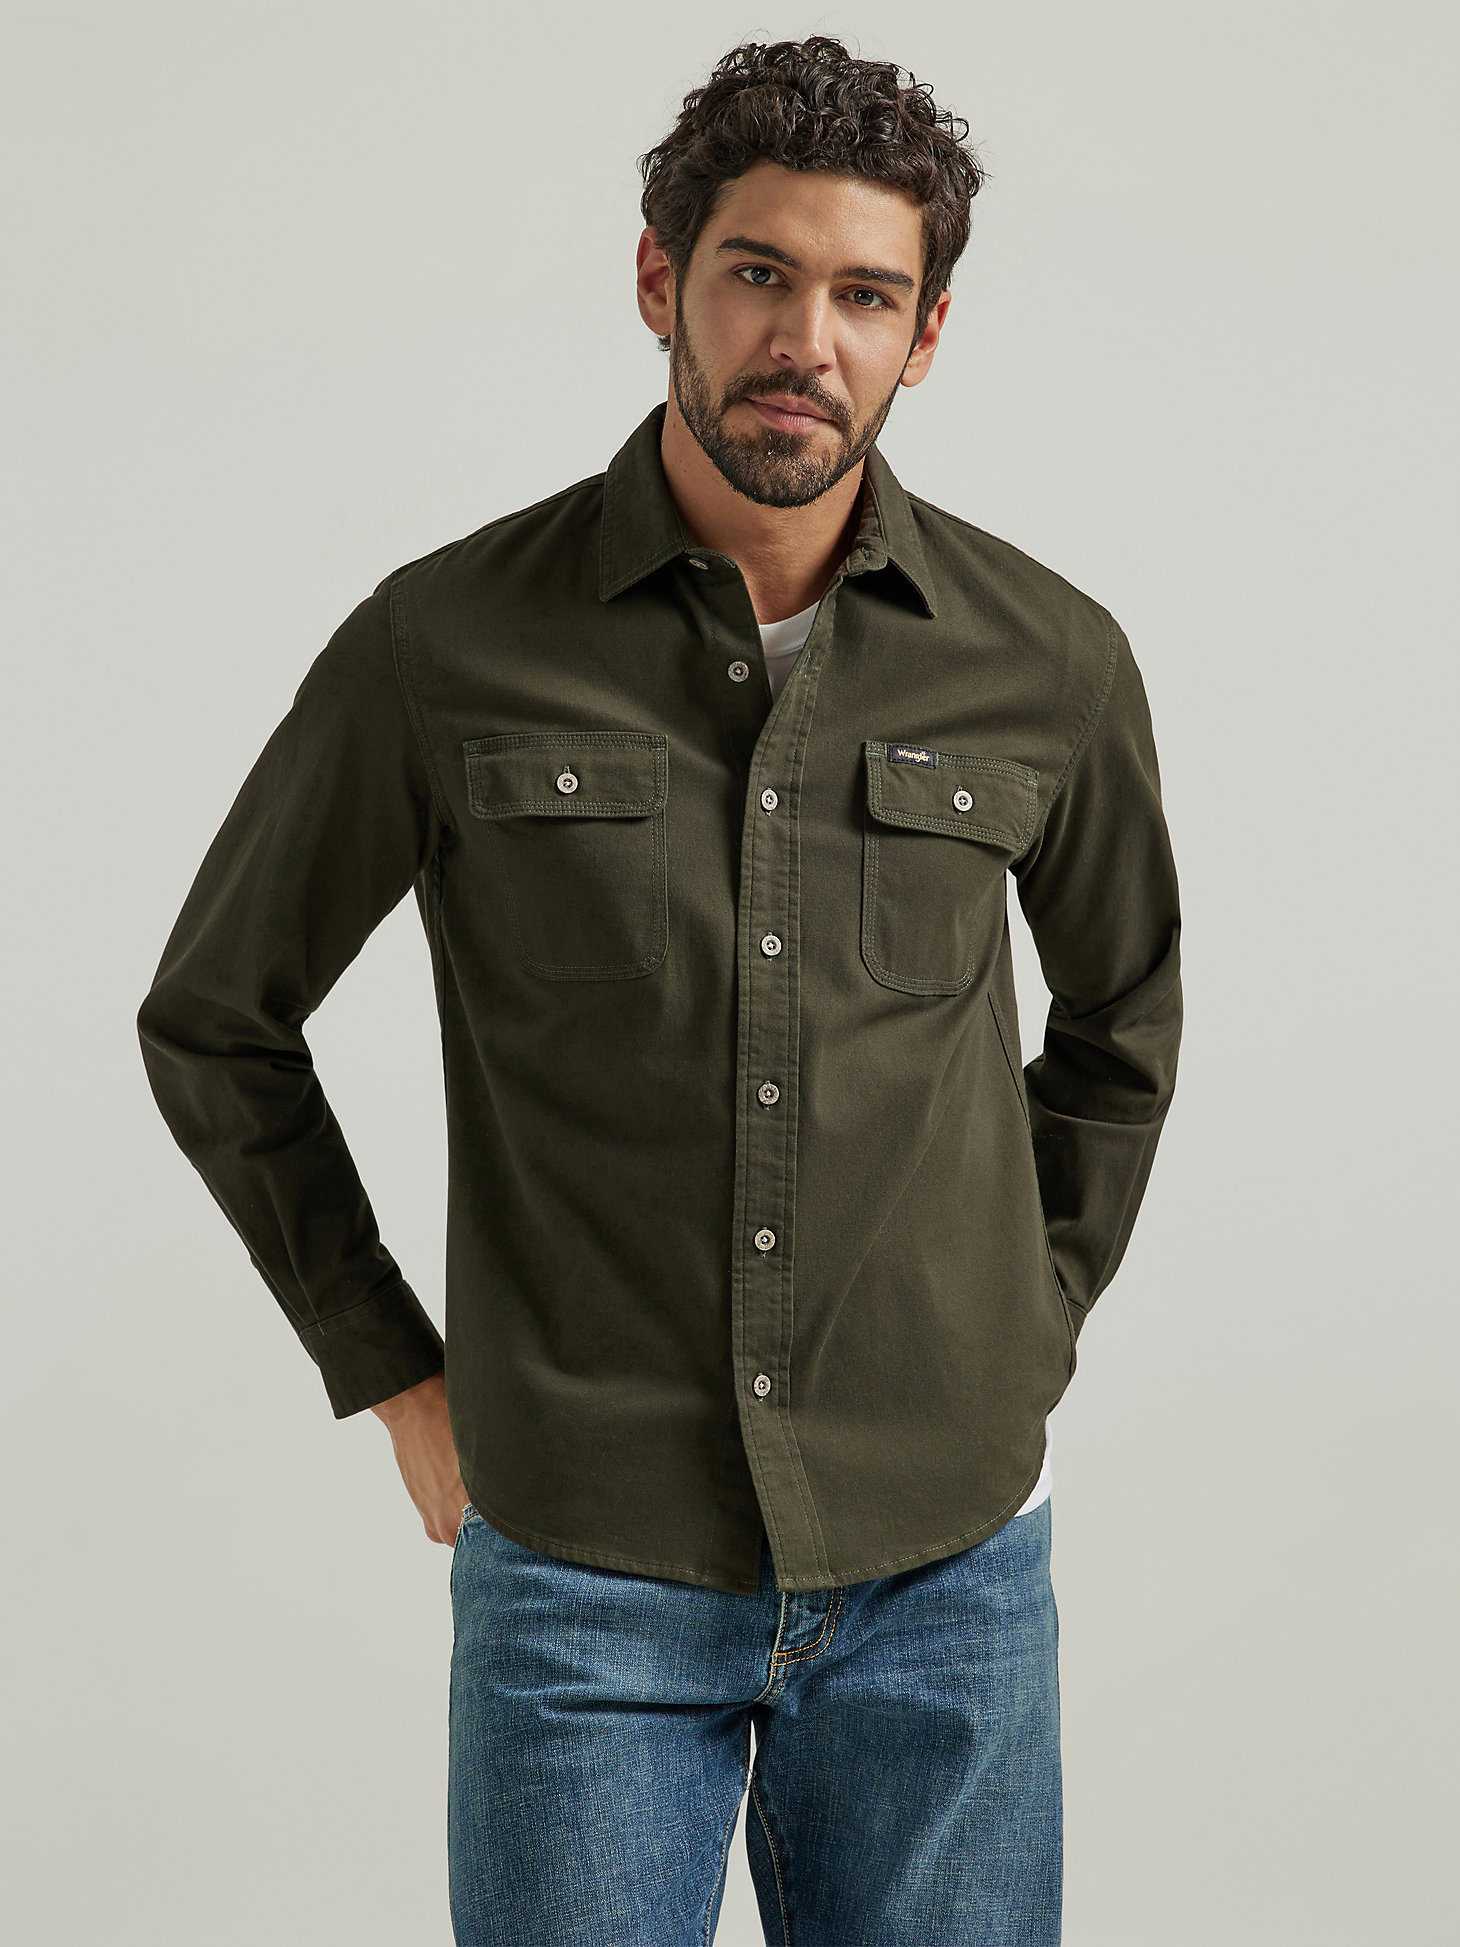 Men's Wrangler® Epic Soft™ Stretch Twill Shirt in Rosin alternative view 3